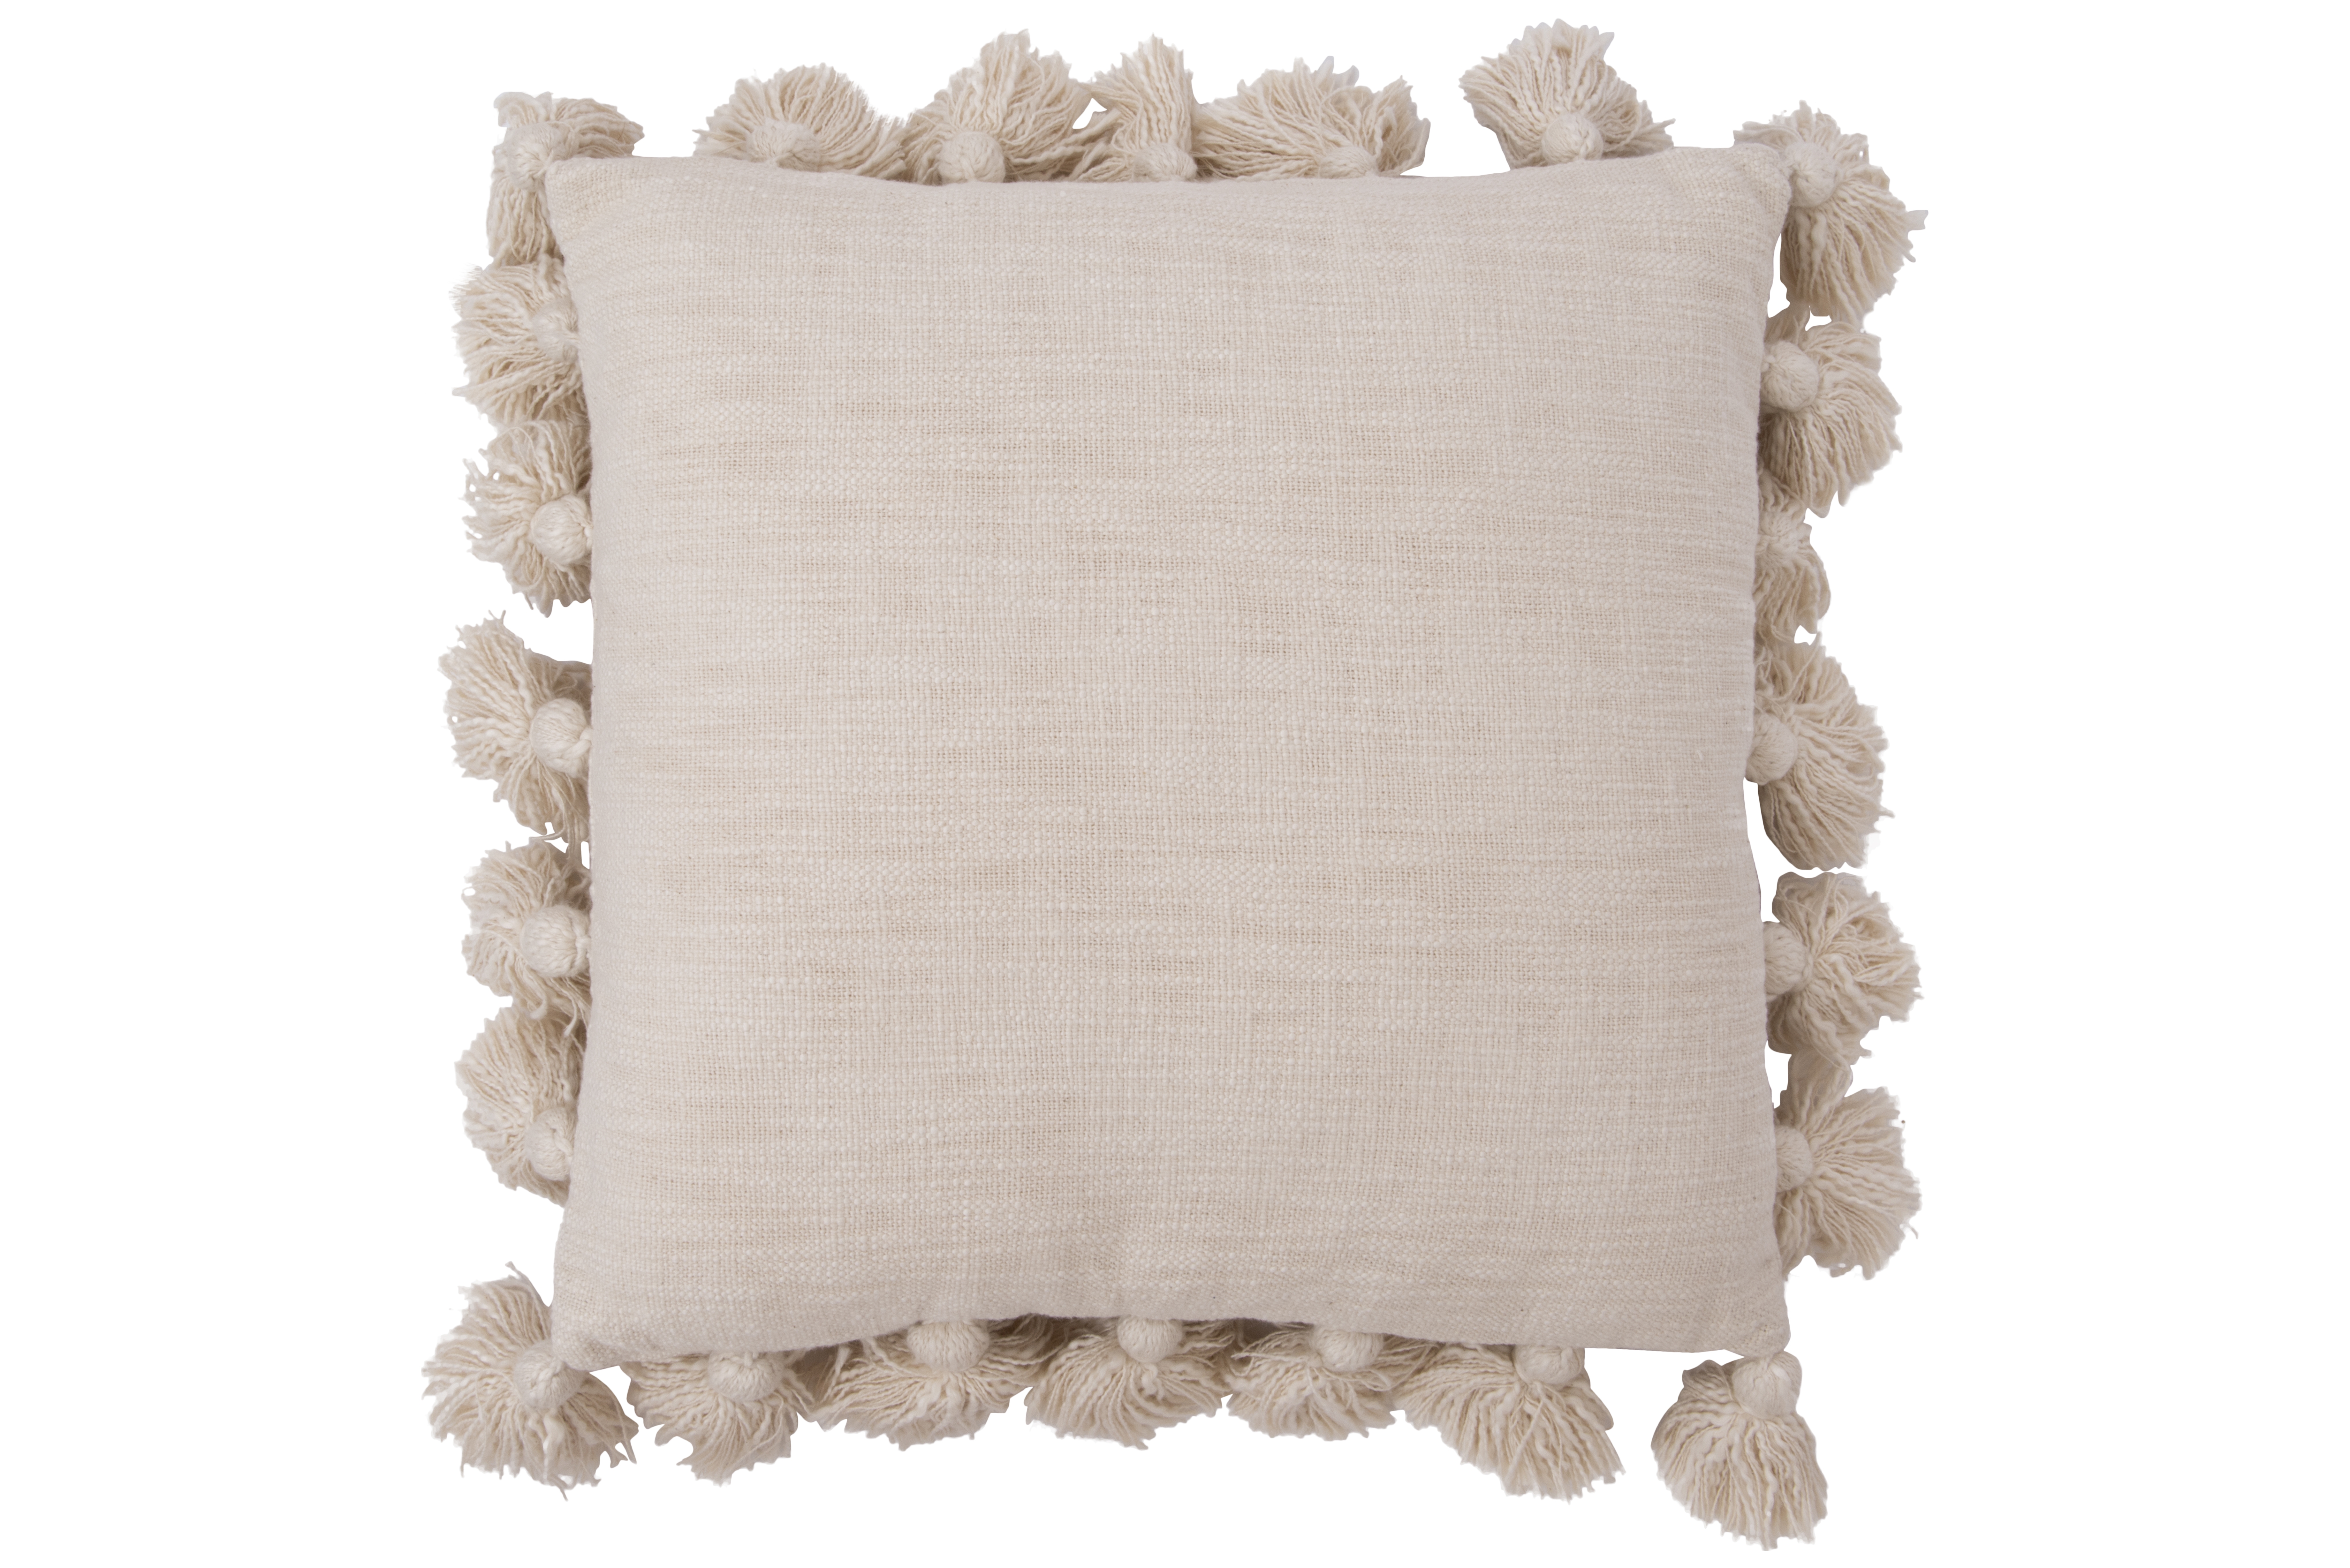 Luxurious Cream Square Cotton Woven Slub Pillow with Tassels - Image 0